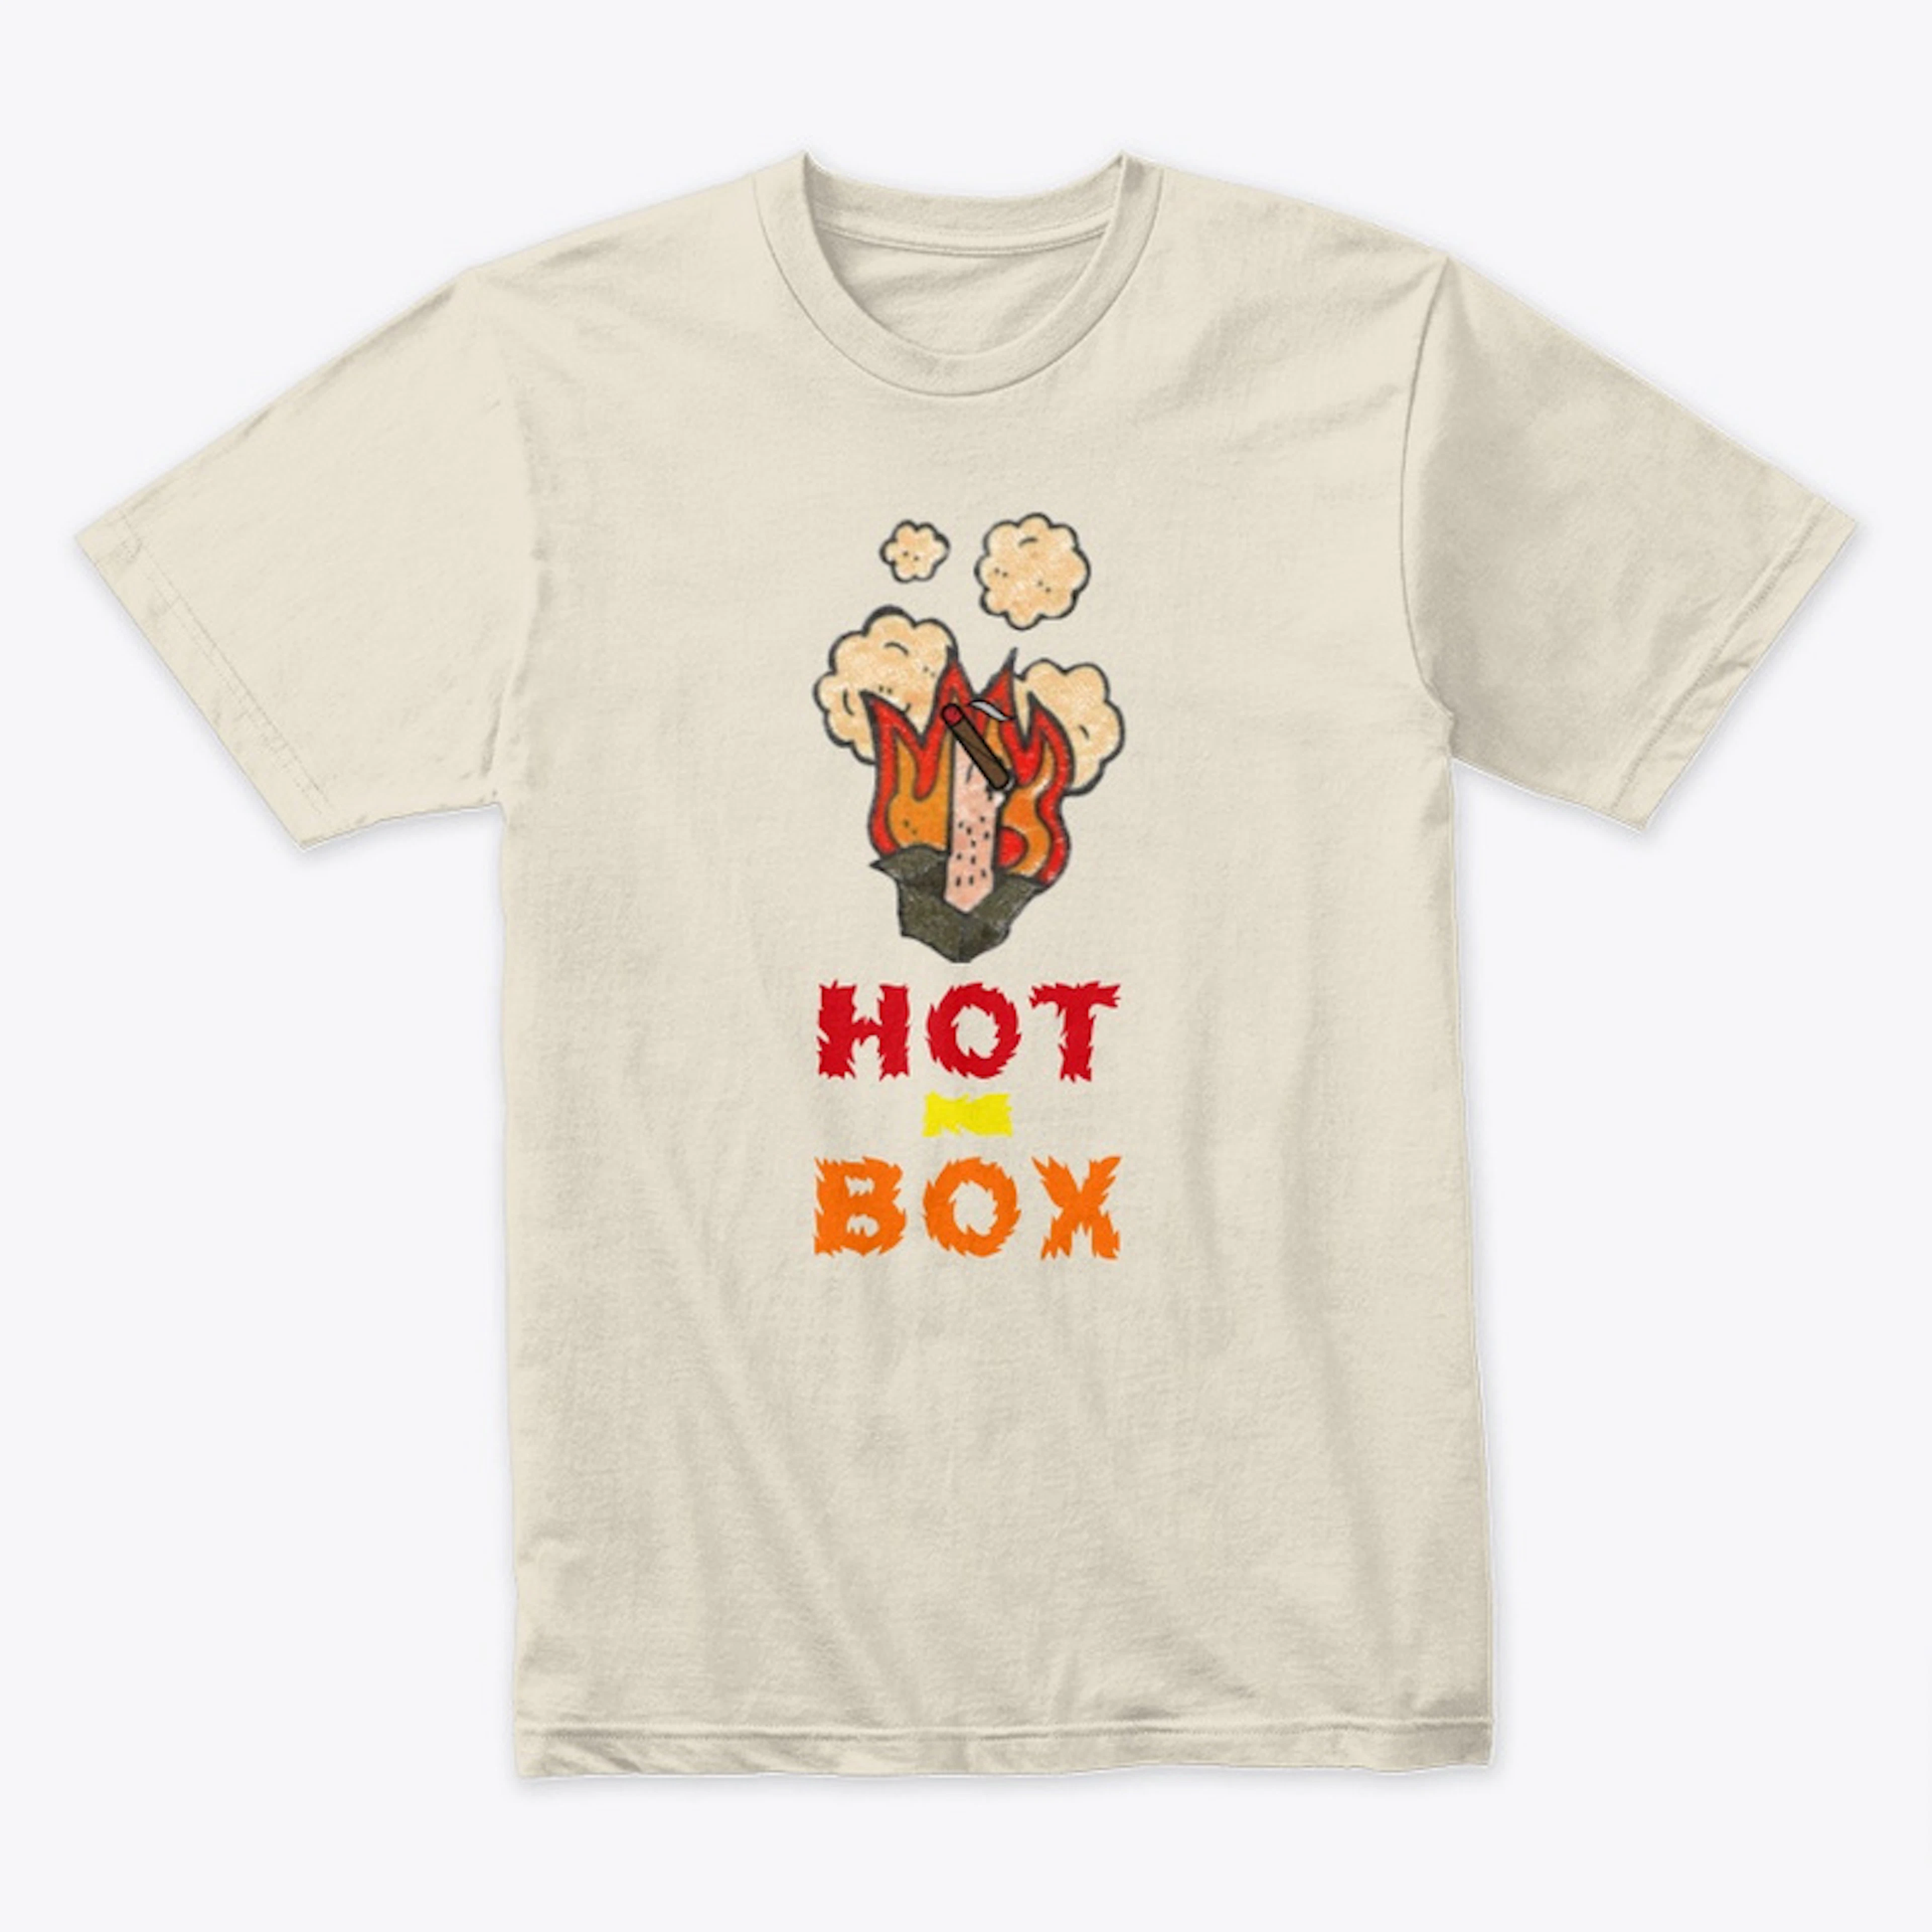 "HOT-BOX" Design.